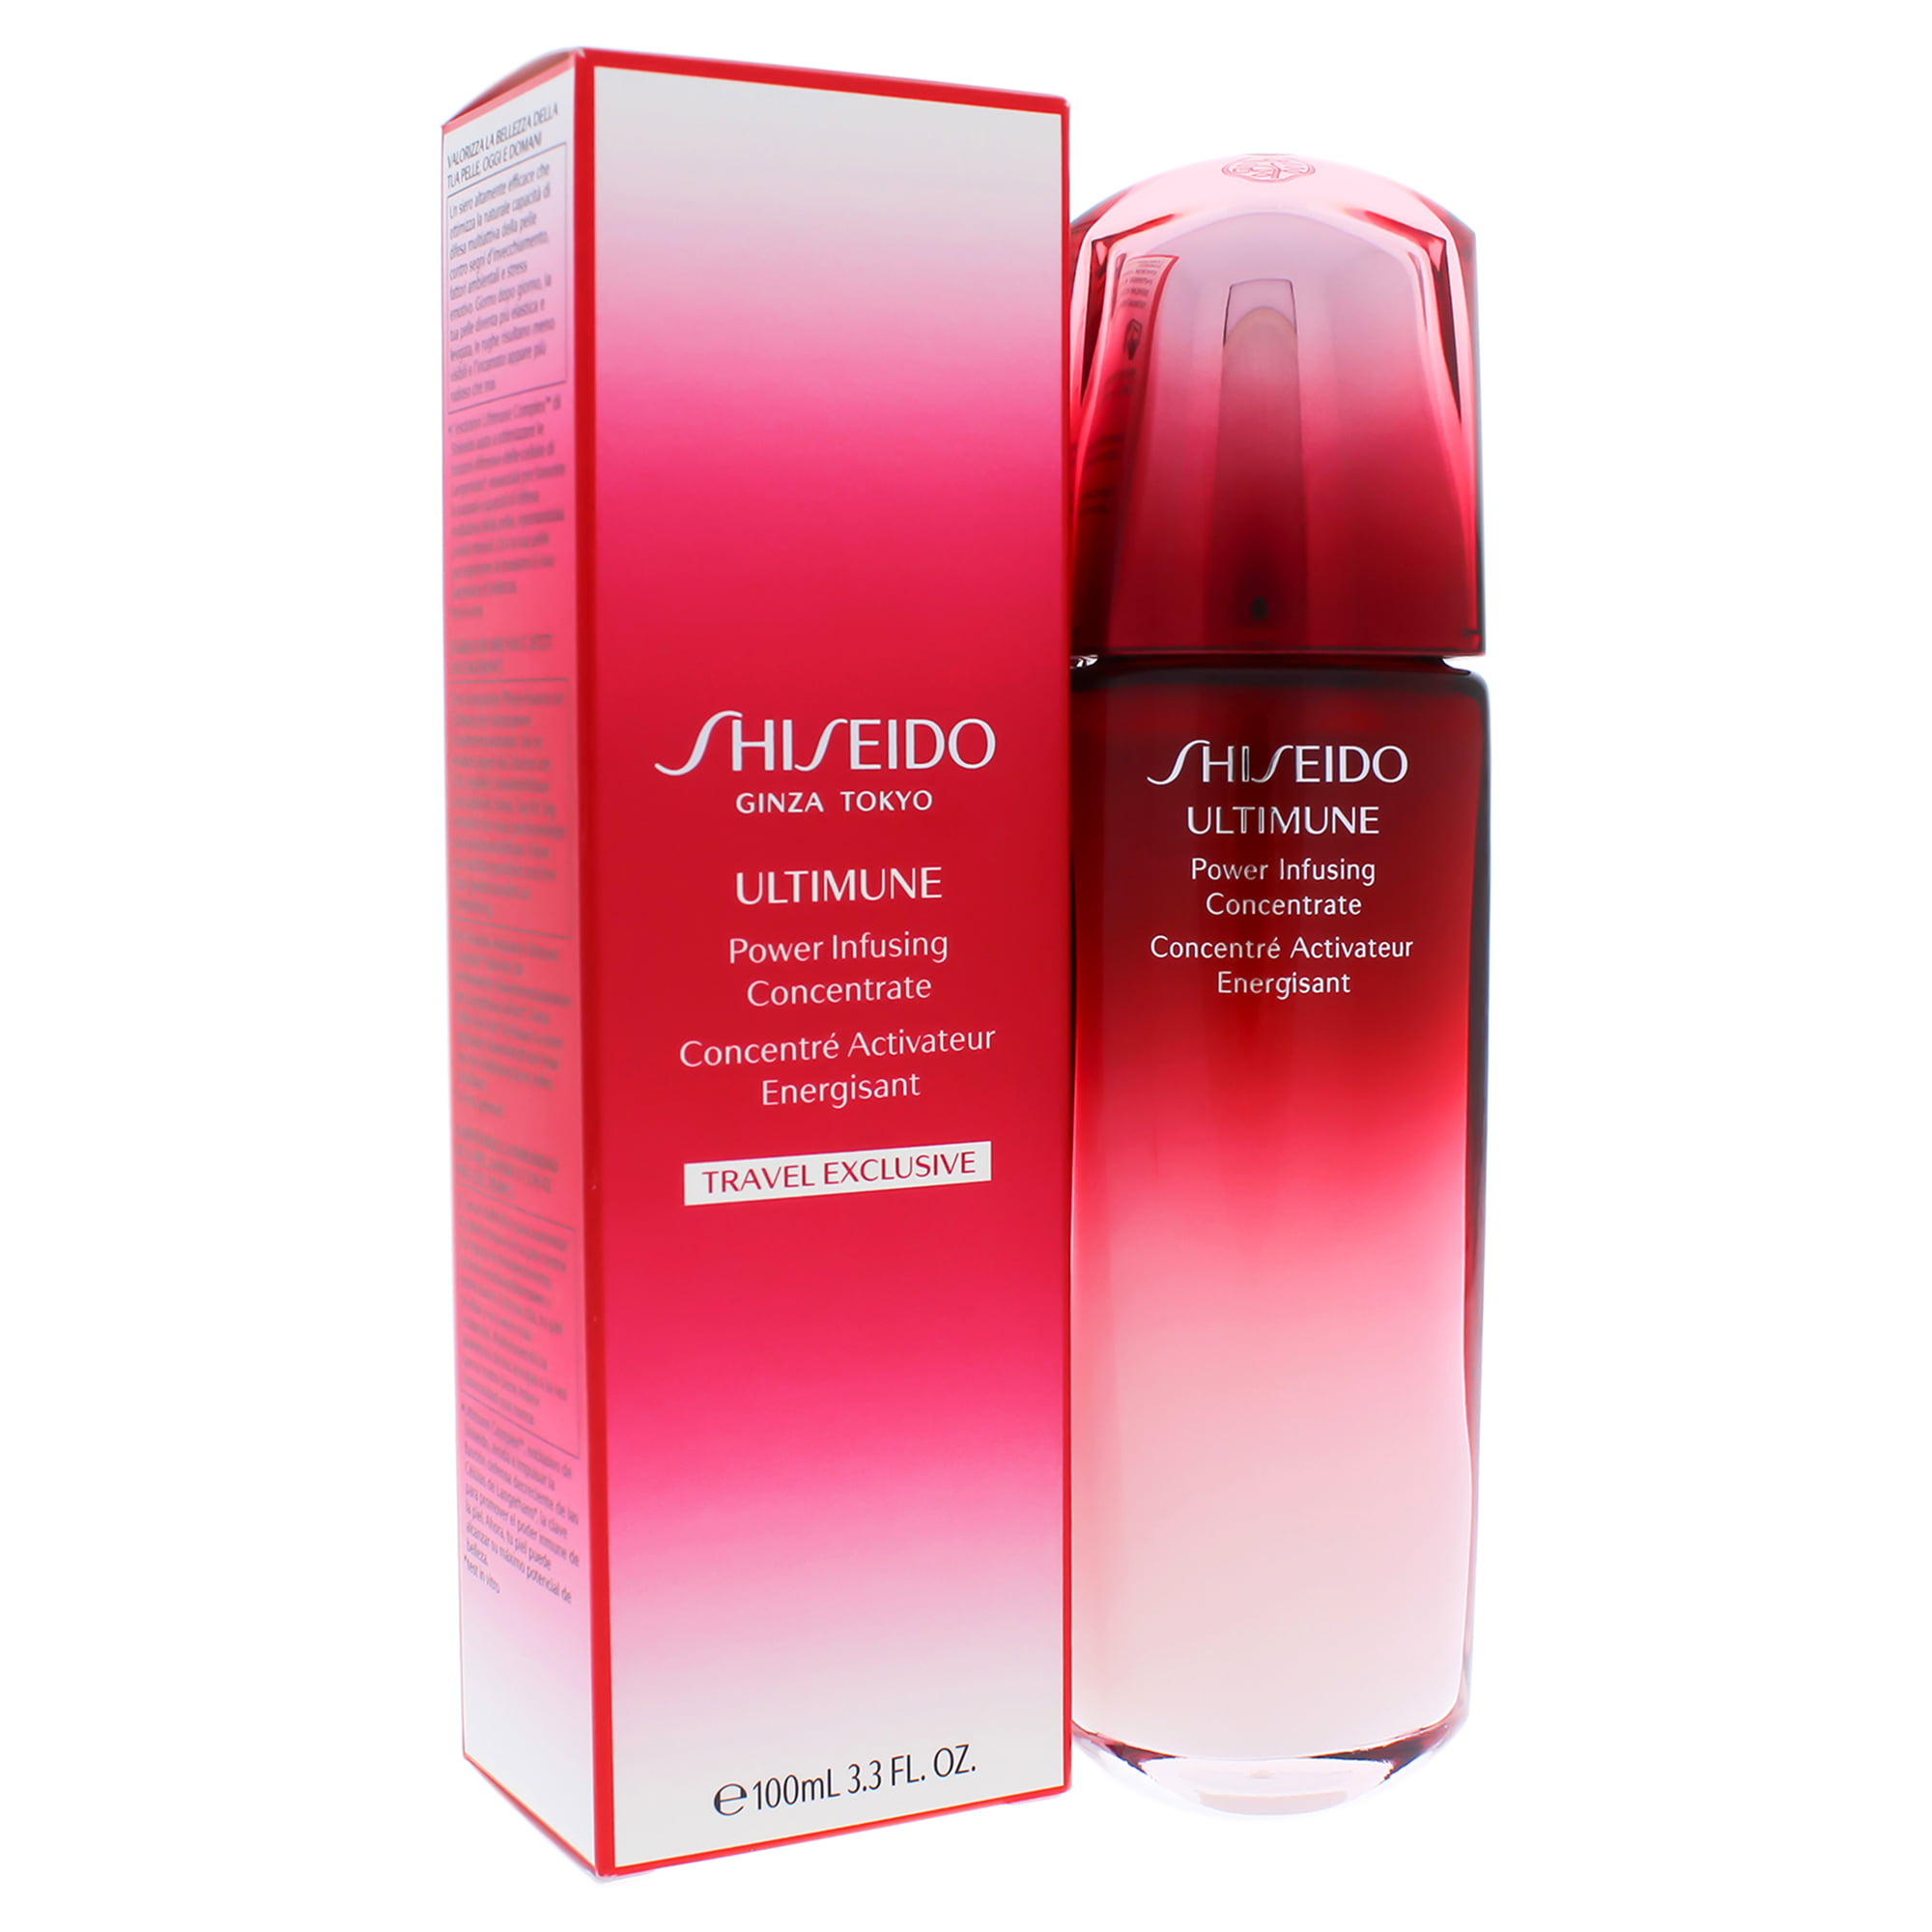 Ultimune shiseido power infusing